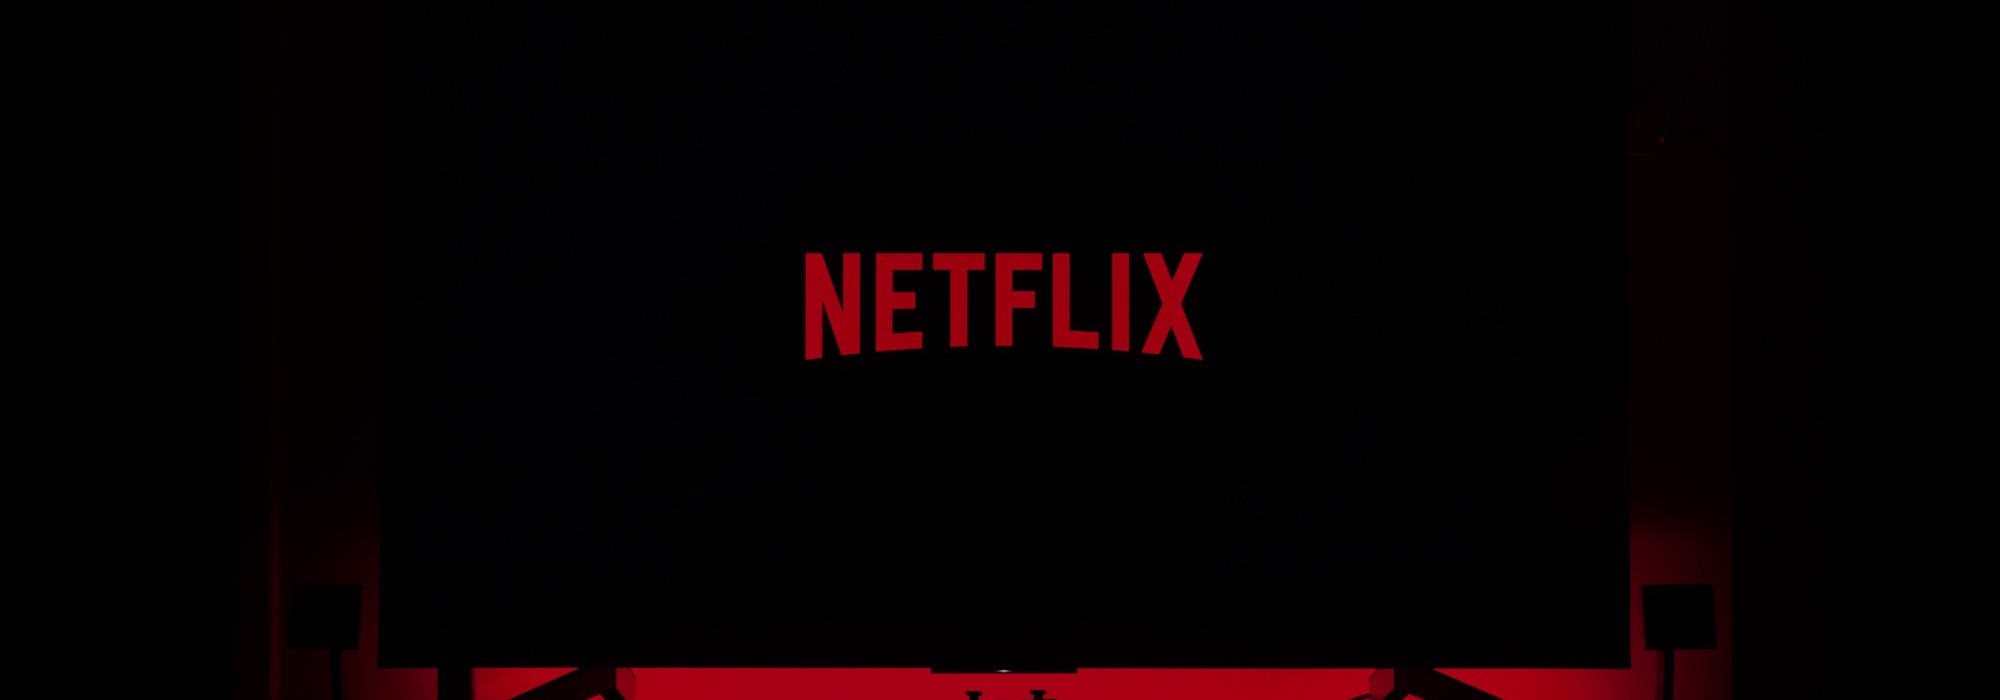 Netflix Q4 2020 Earnings